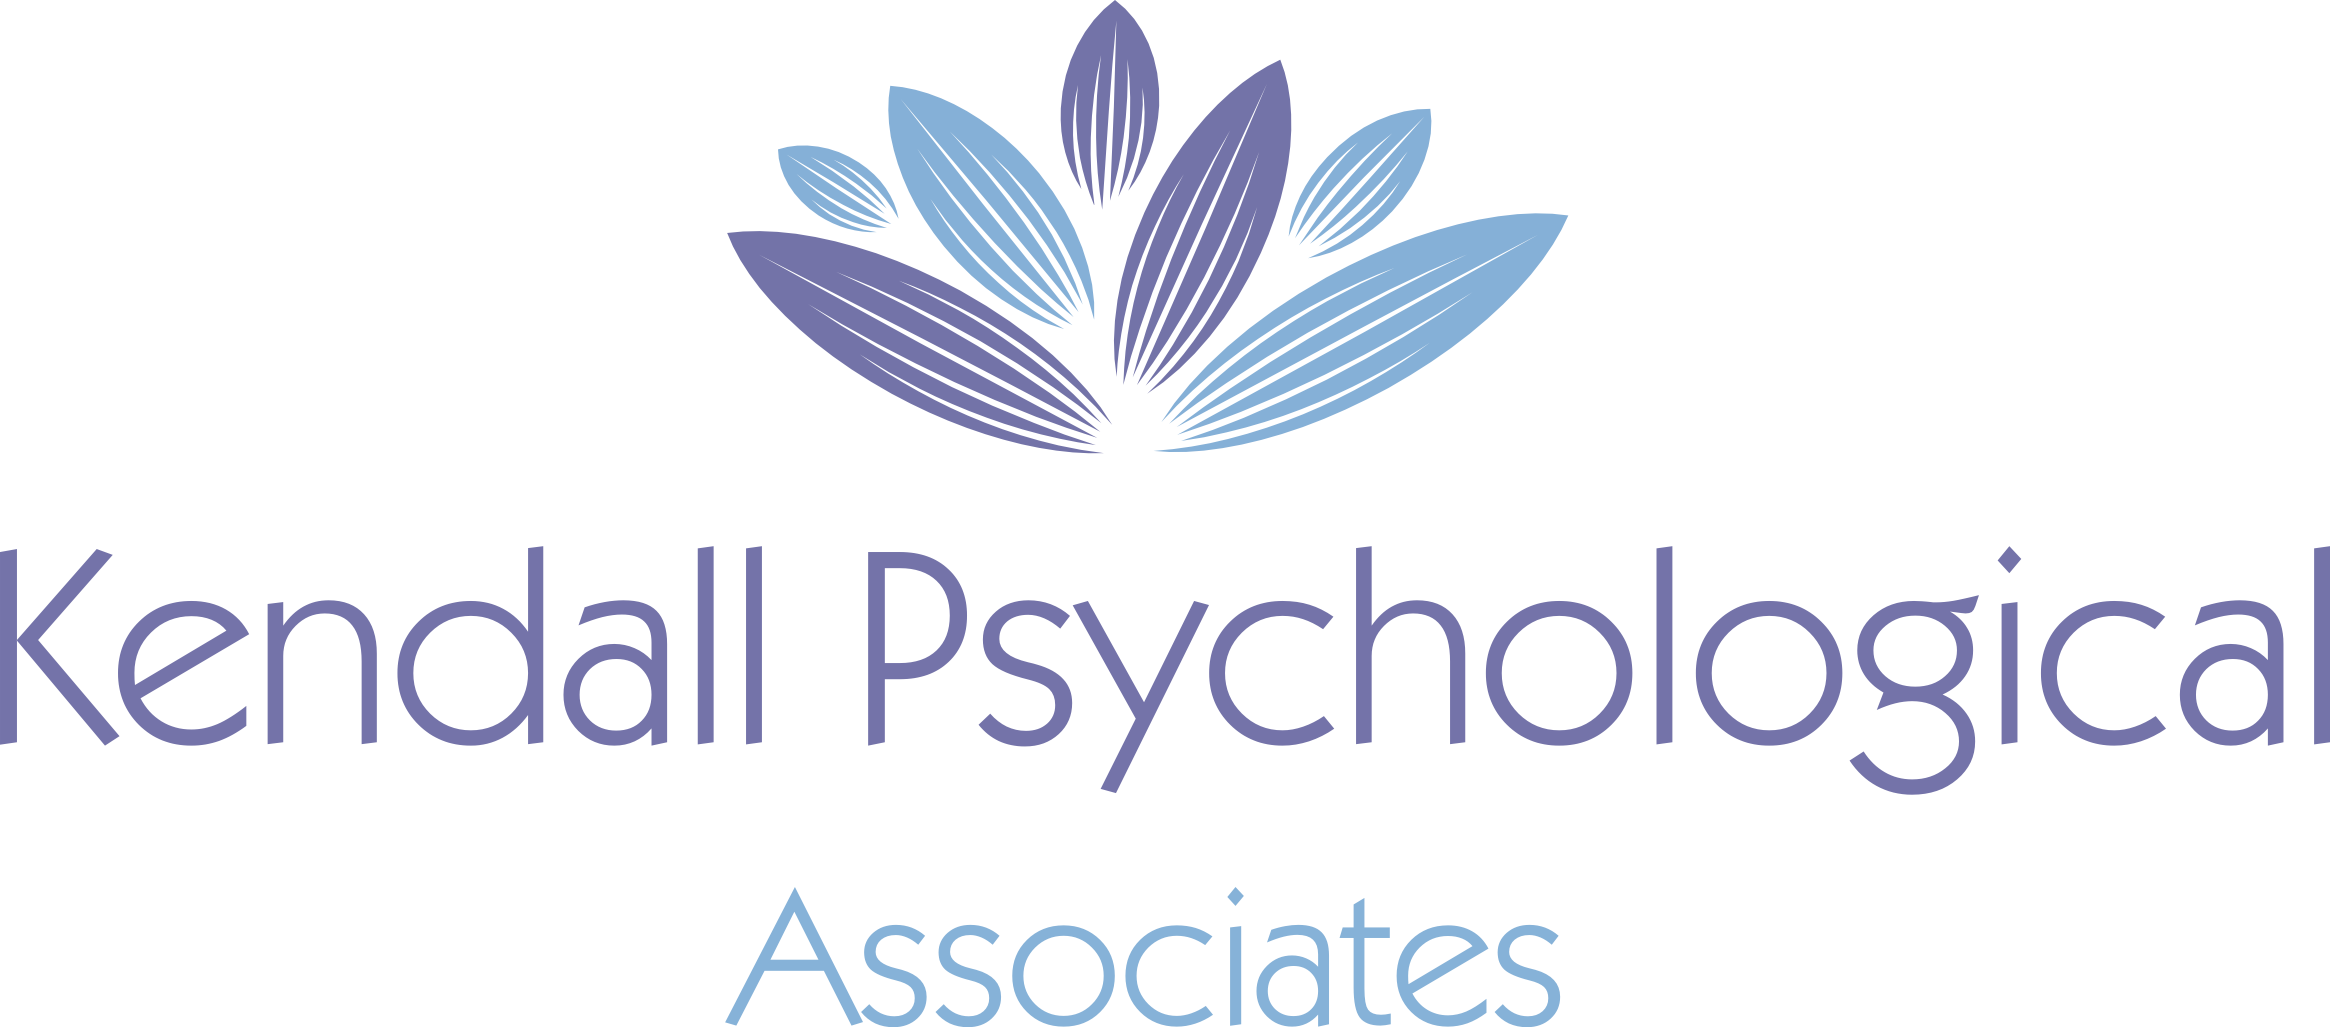 Kendall Psychological Associates